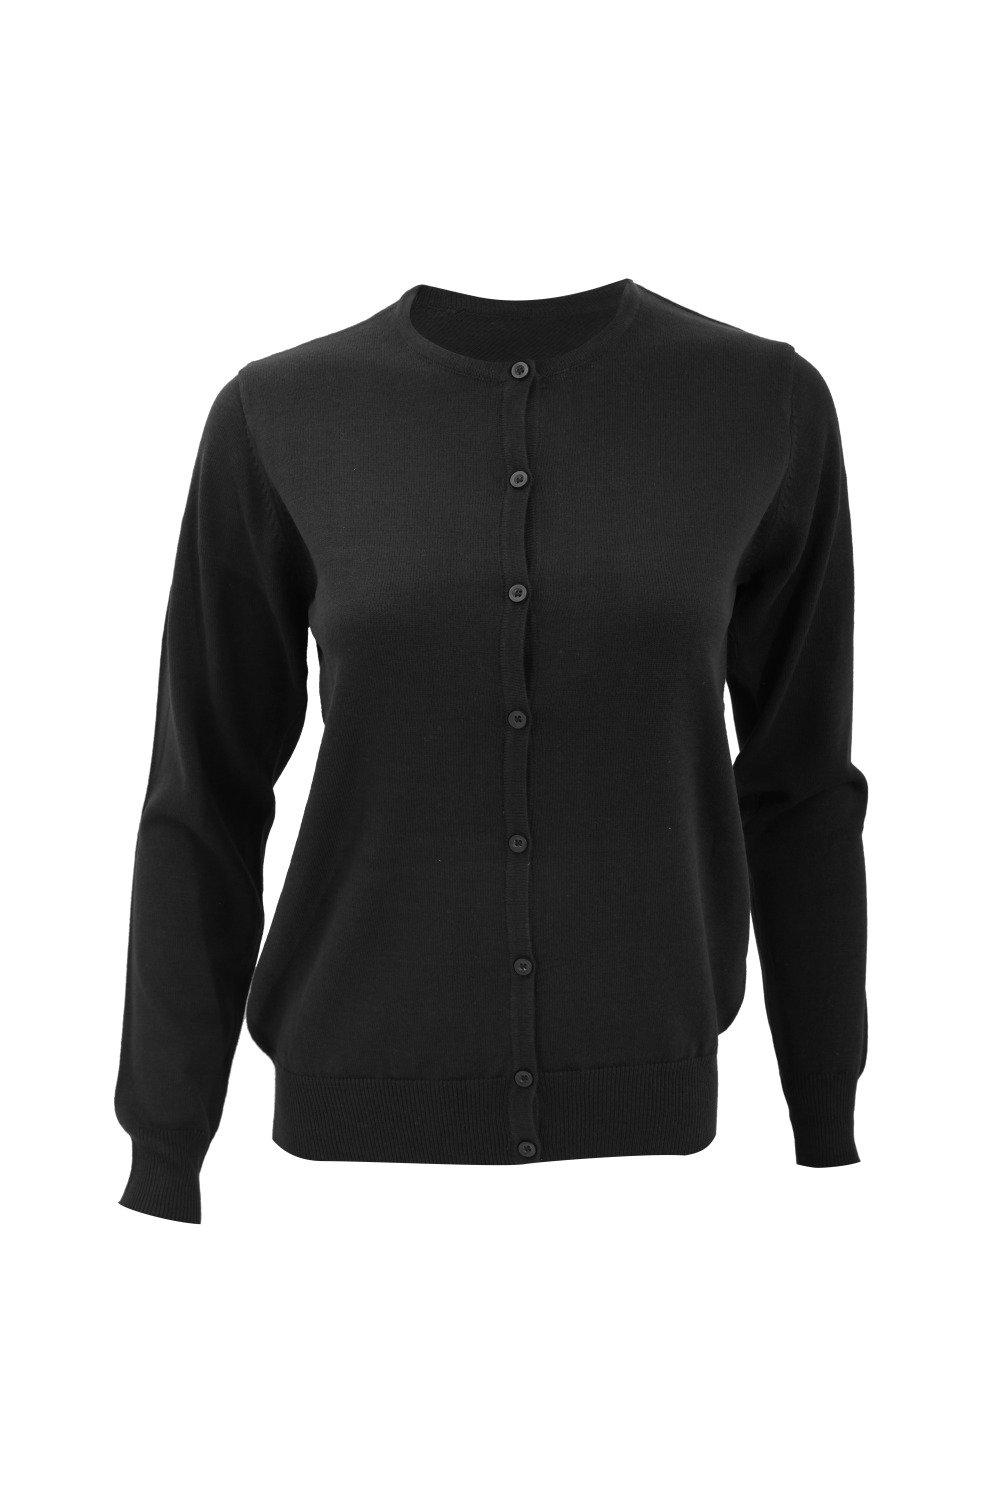 Kustom Kit Women's Round Neck Cardigan / Knitwear|Size: 6|black